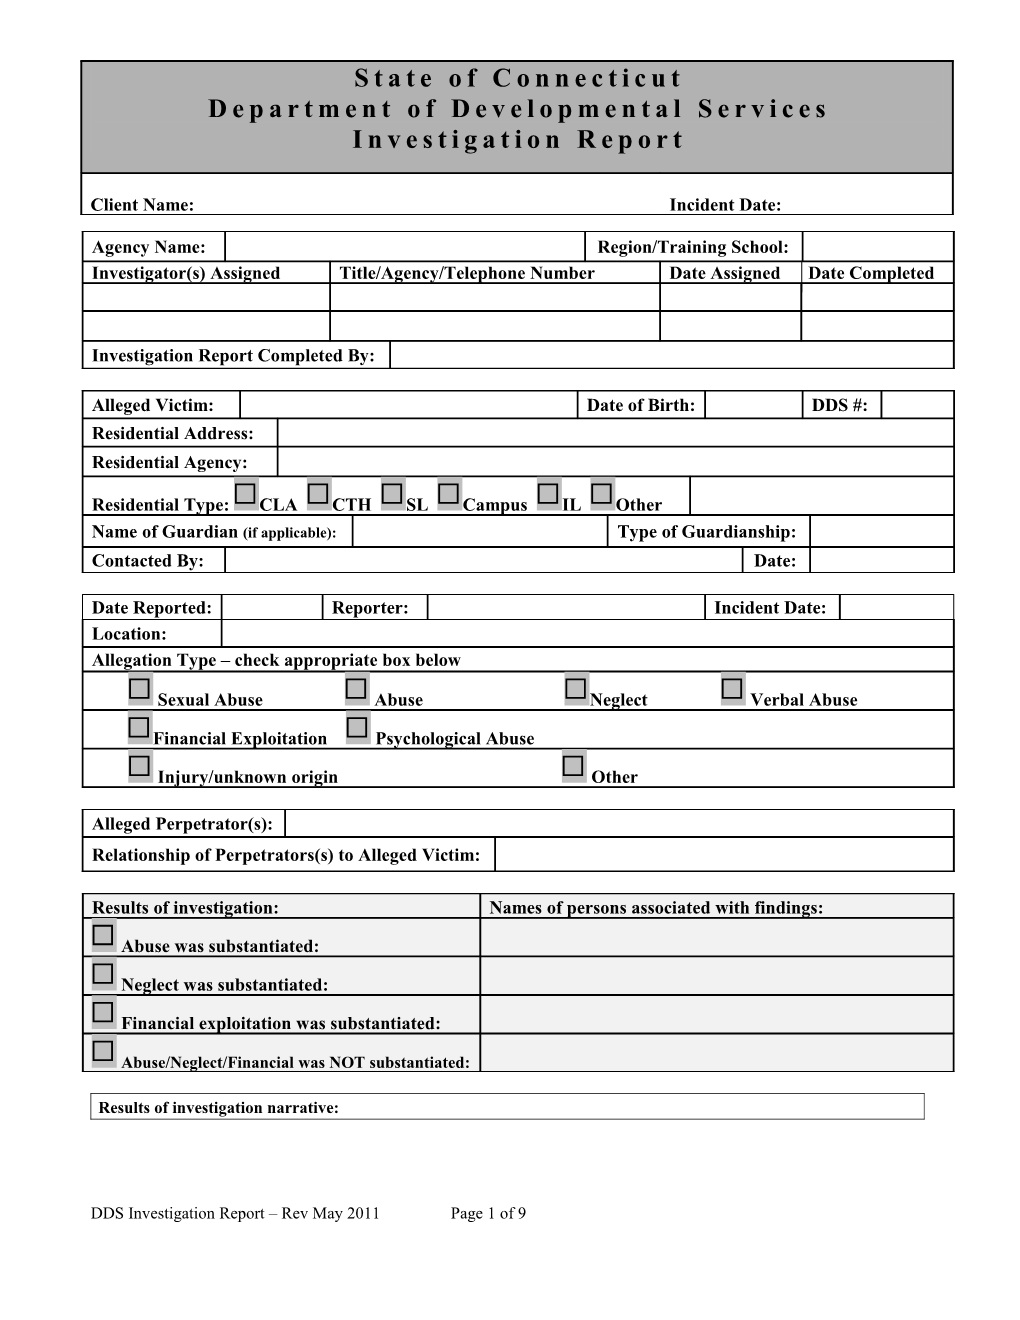 DDS Investigation Report Form